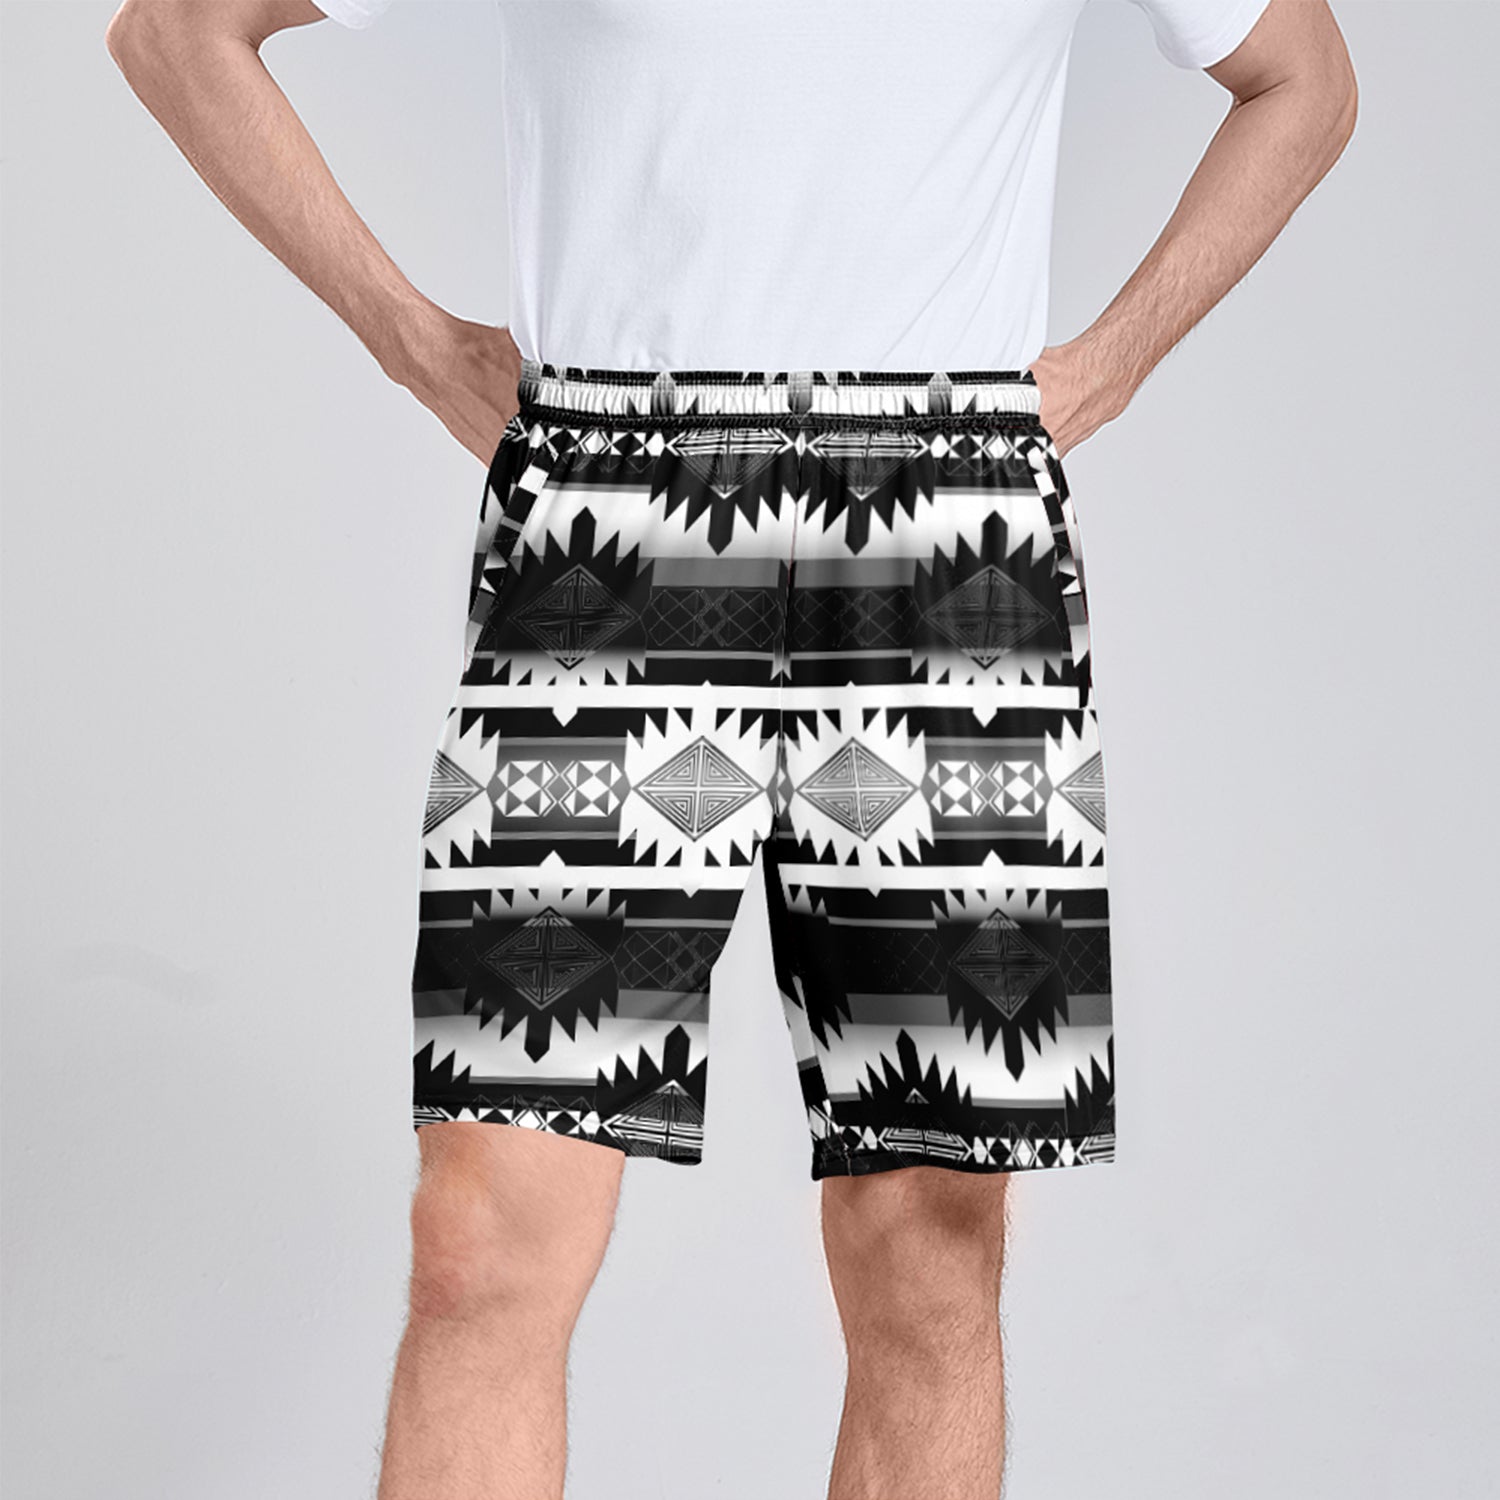 Okotoks Black and White Athletic Shorts with Pockets